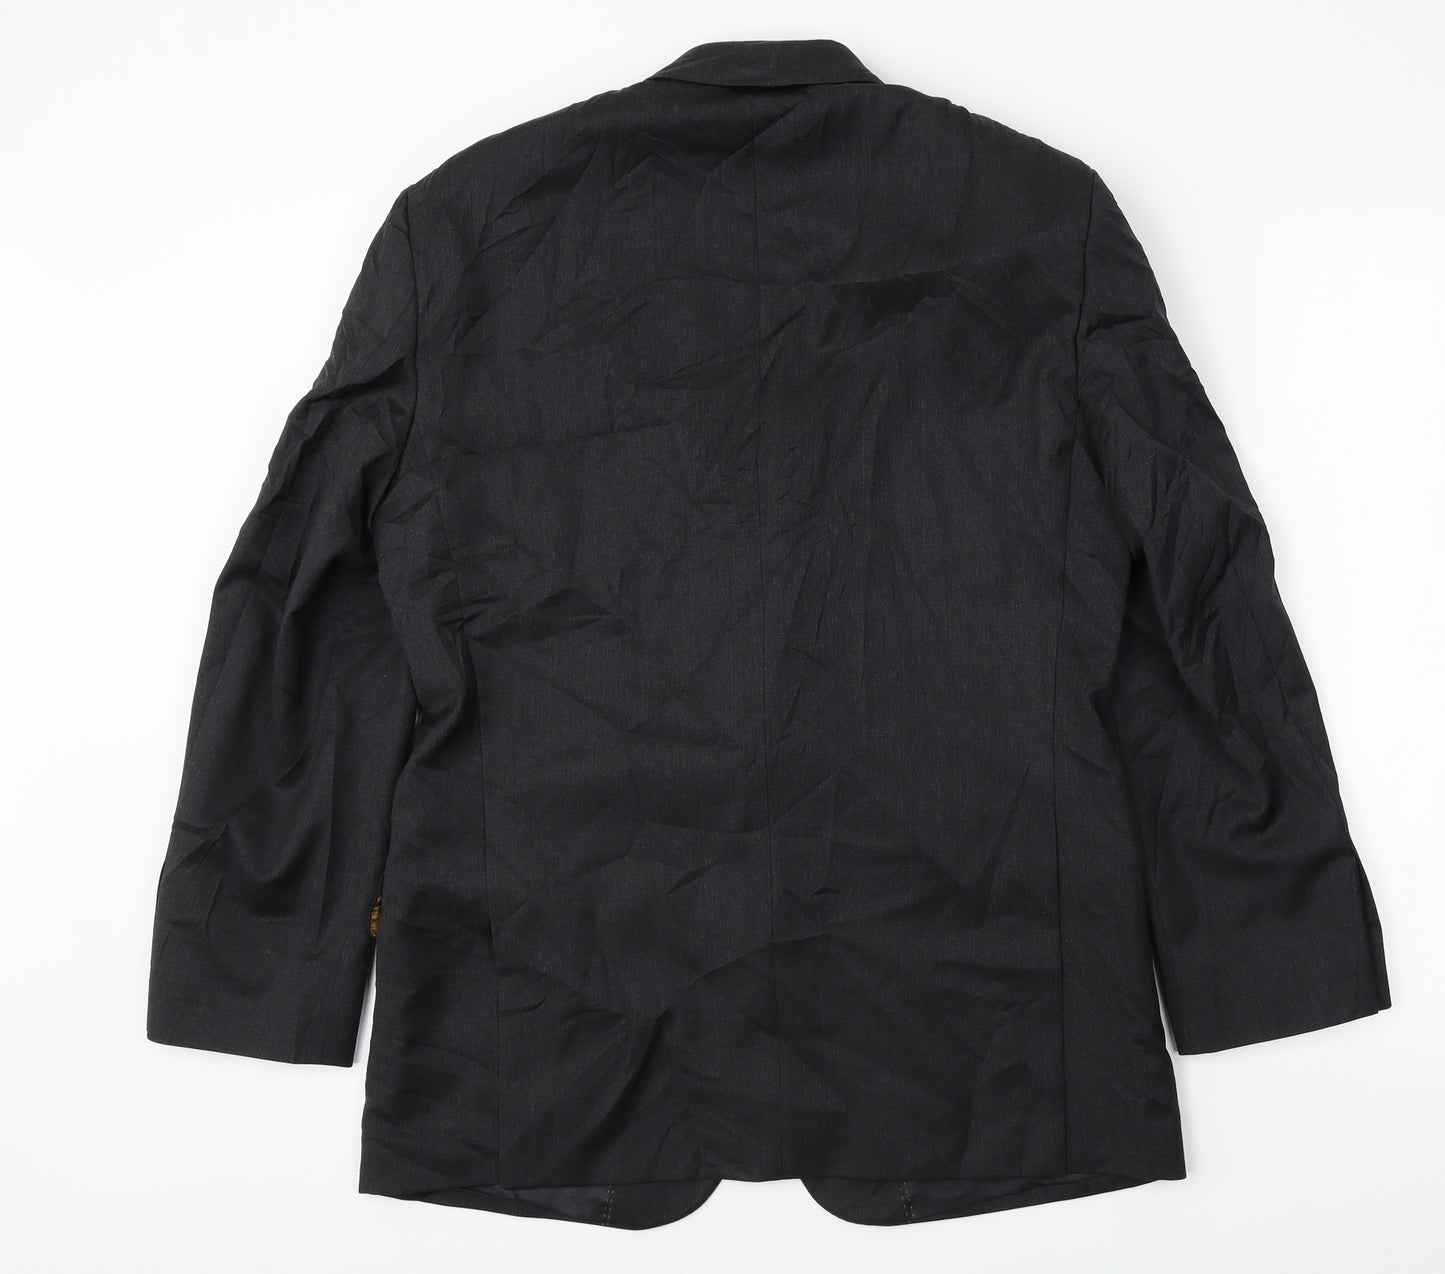 Simon Carter  Mens Black   Jacket Blazer Size 40